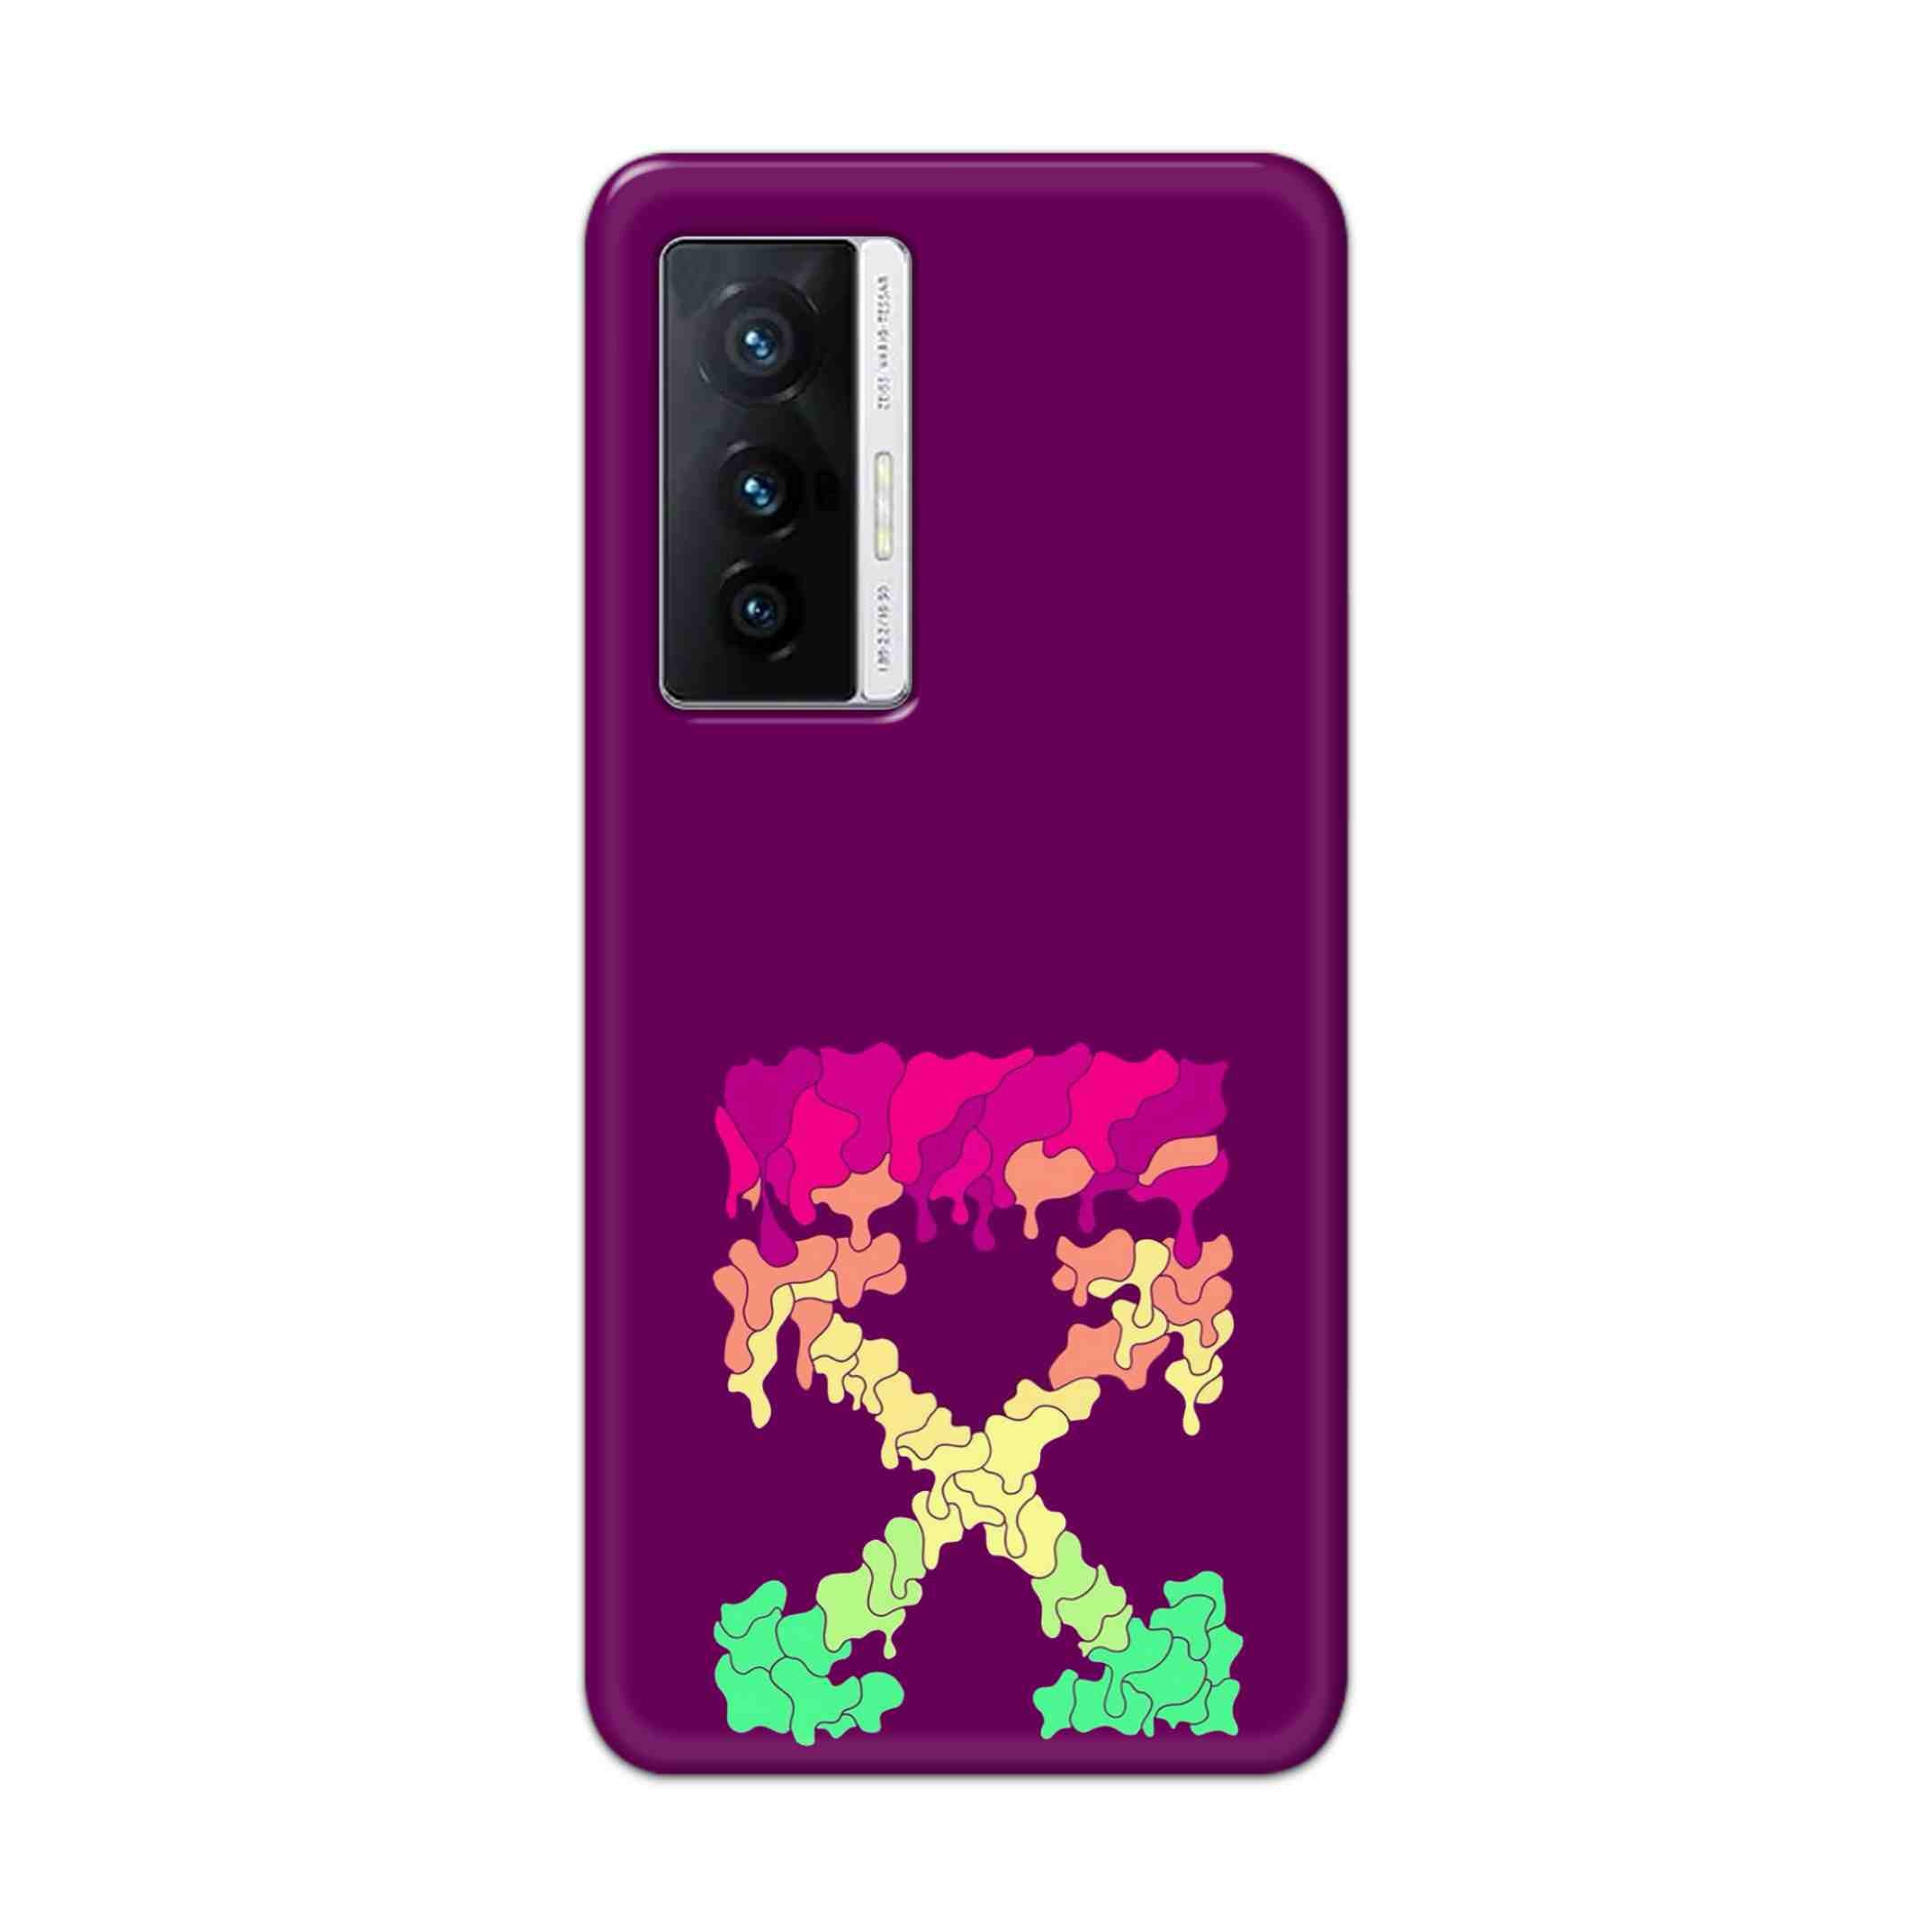 Buy X.O Hard Back Mobile Phone Case Cover For Vivo X70 Online